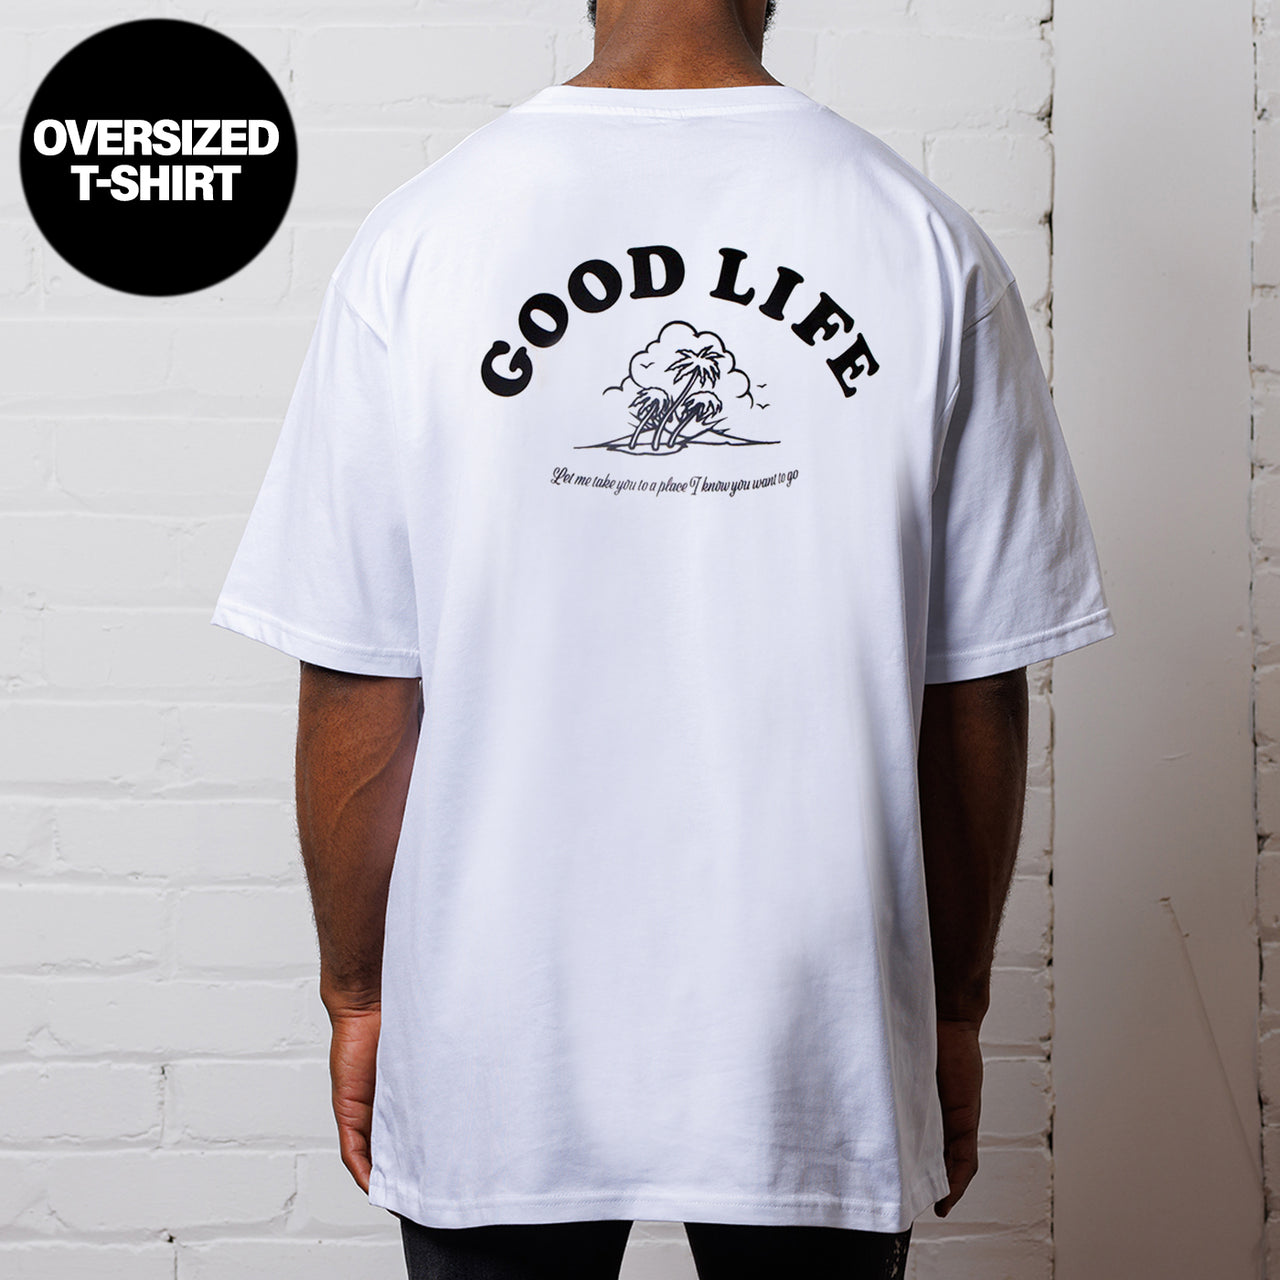 Good Life  - V1 Oversized Tshirt - White